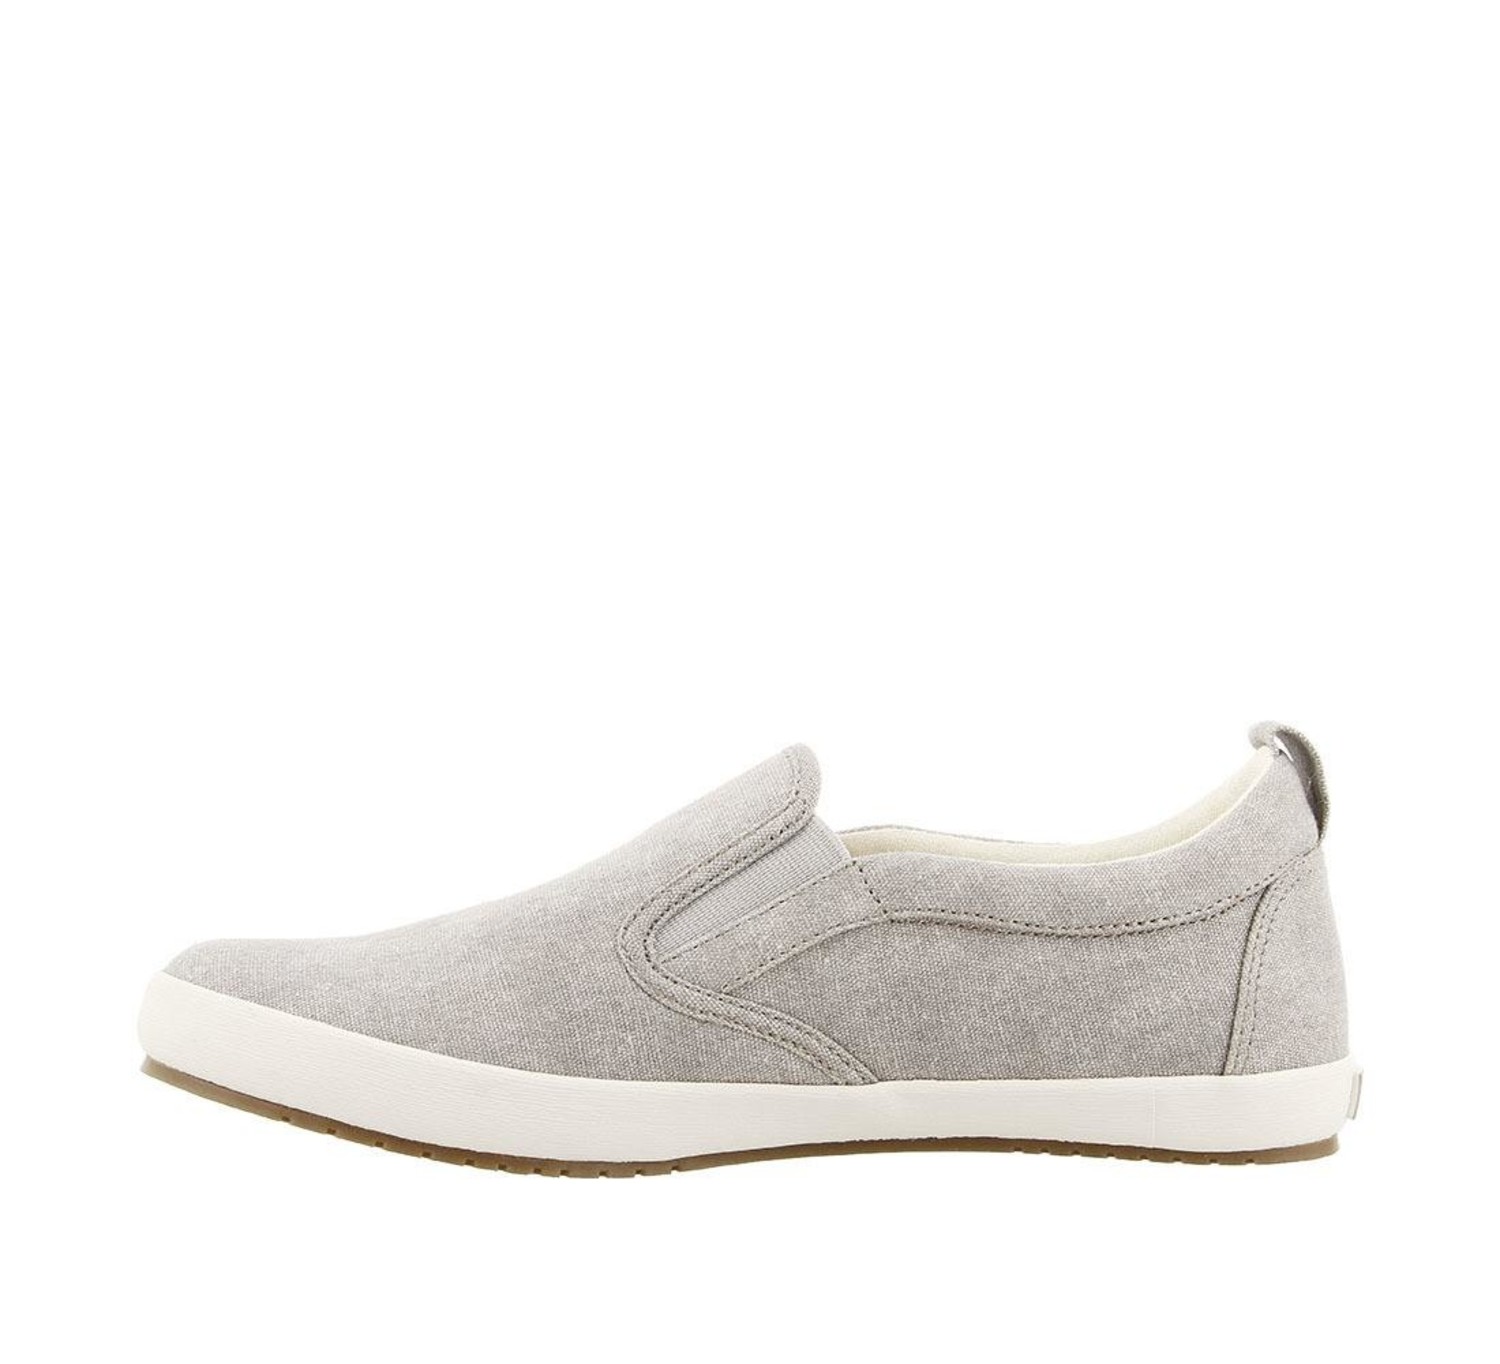 Dandy - Grey Wash Canvas - Gentry's Footwear